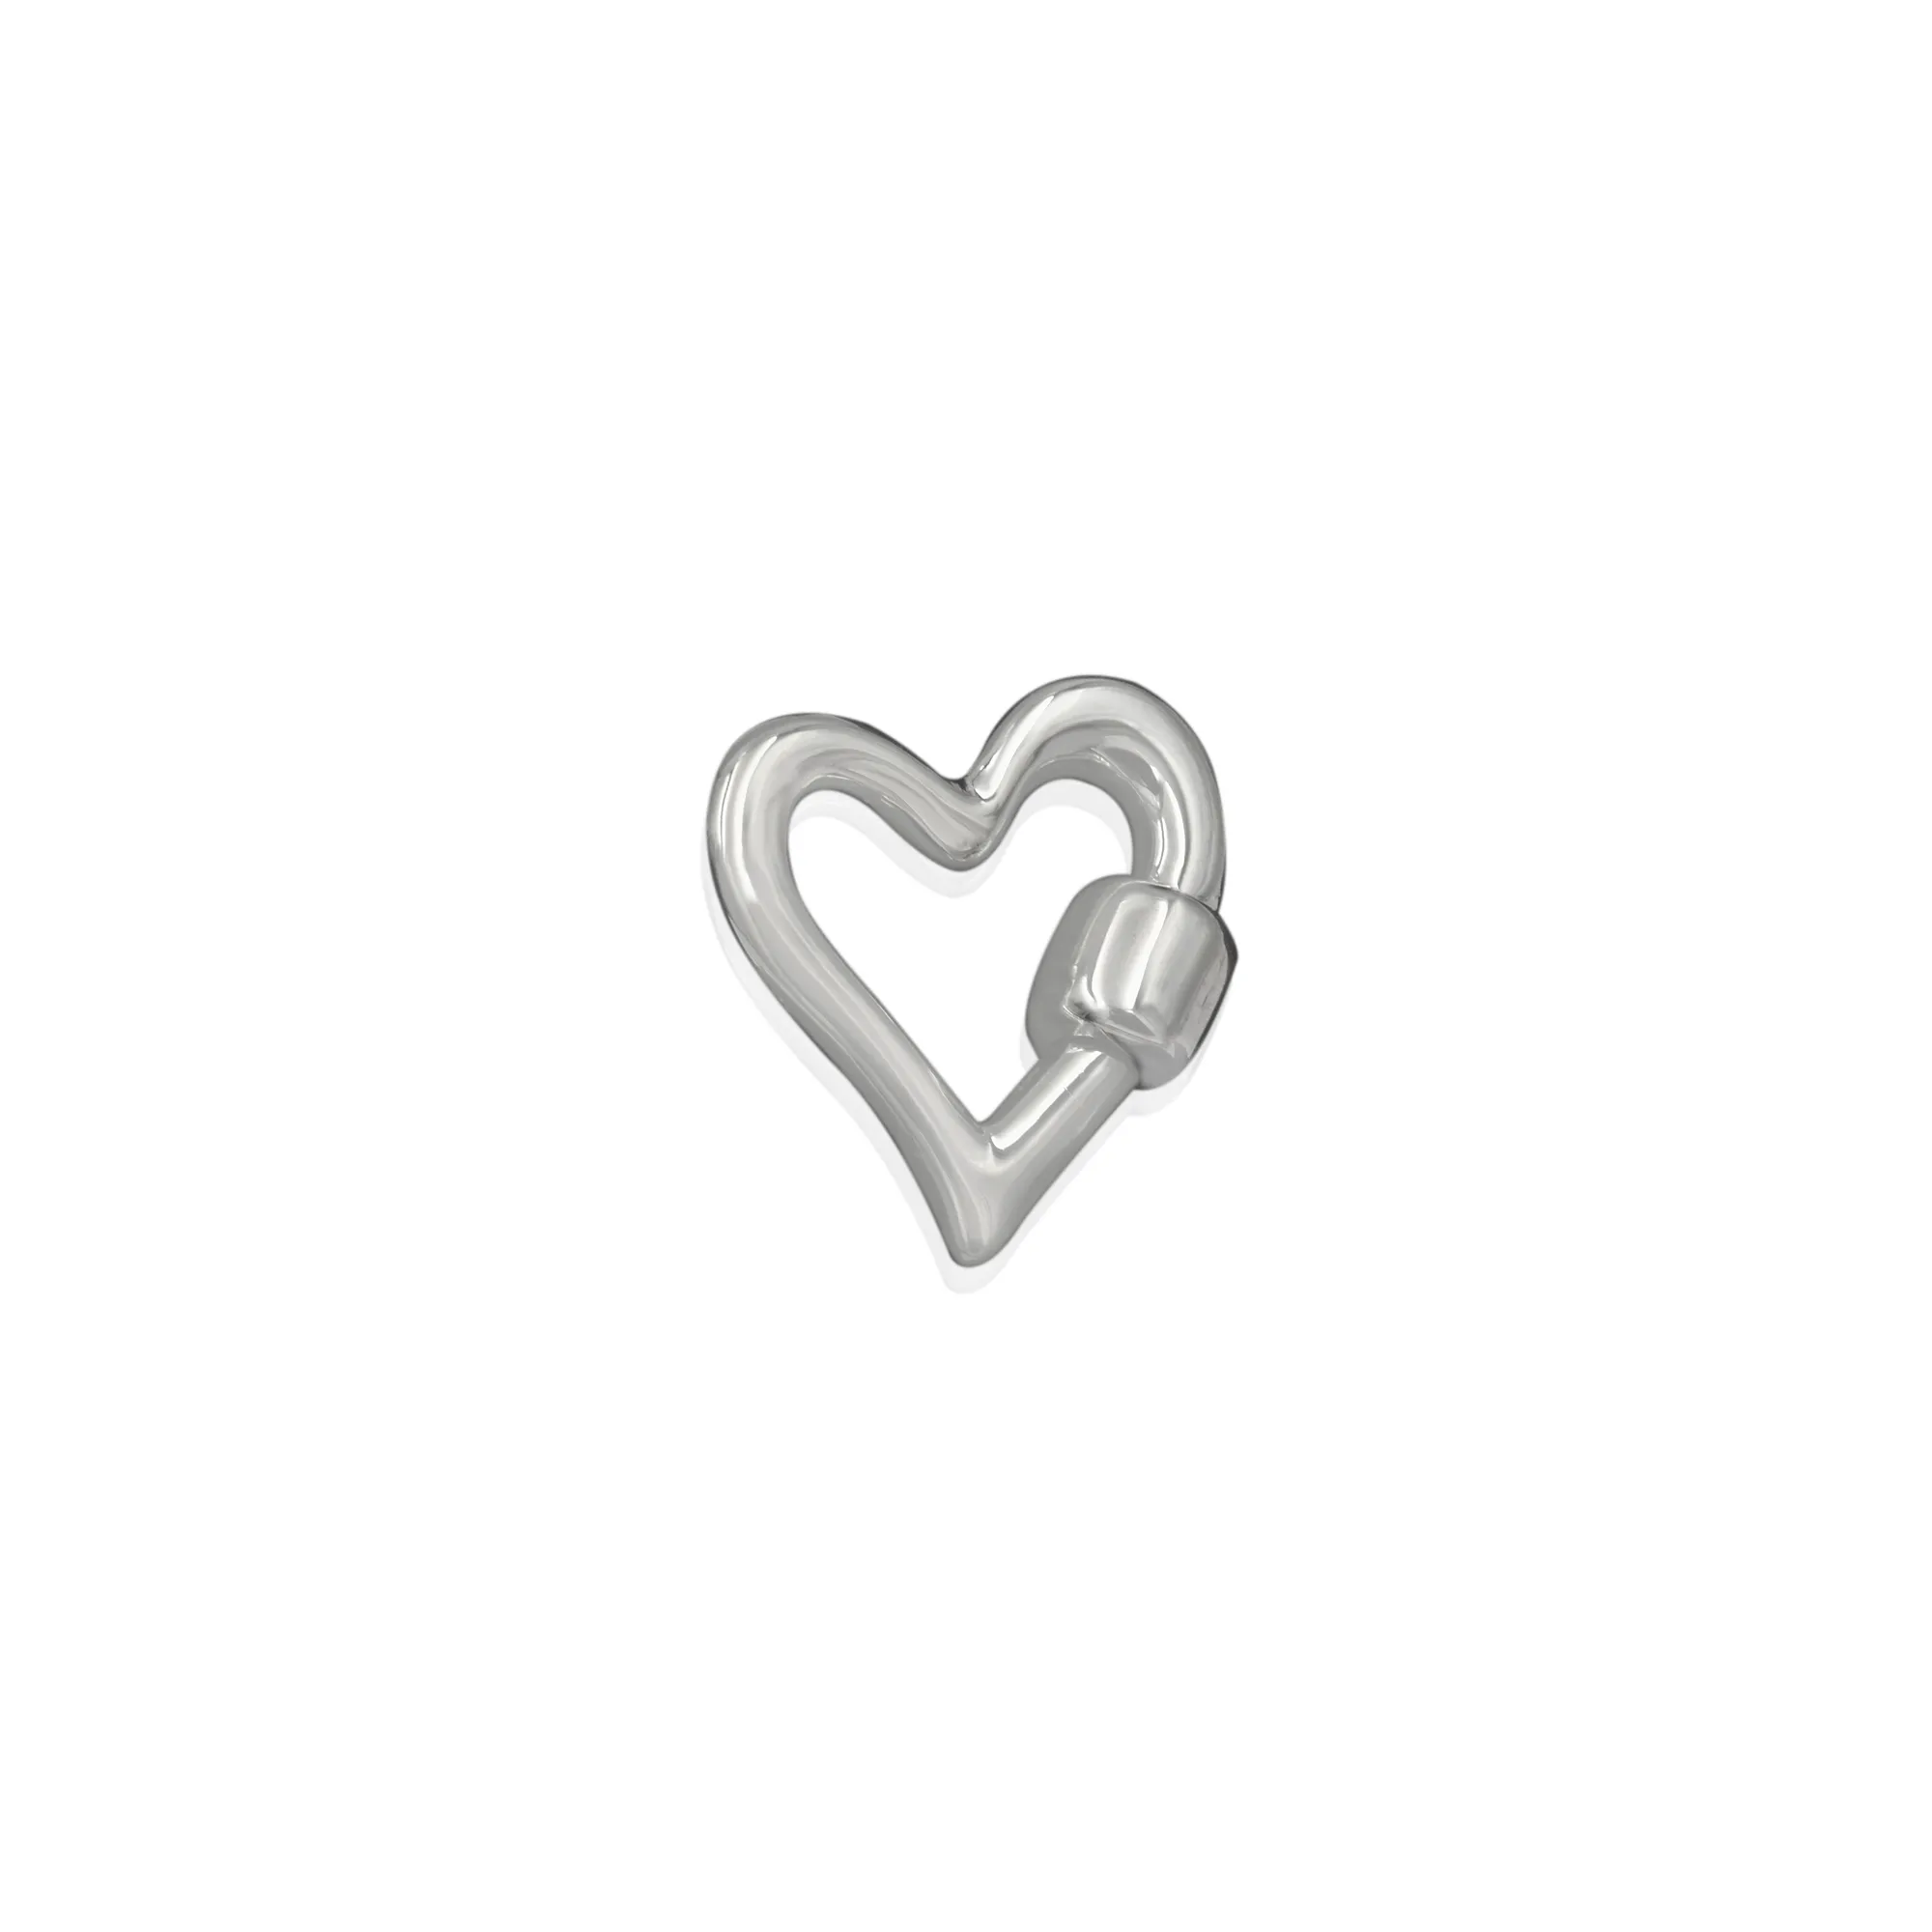 Wholesale 925 Silver Heart Carabiner Lock